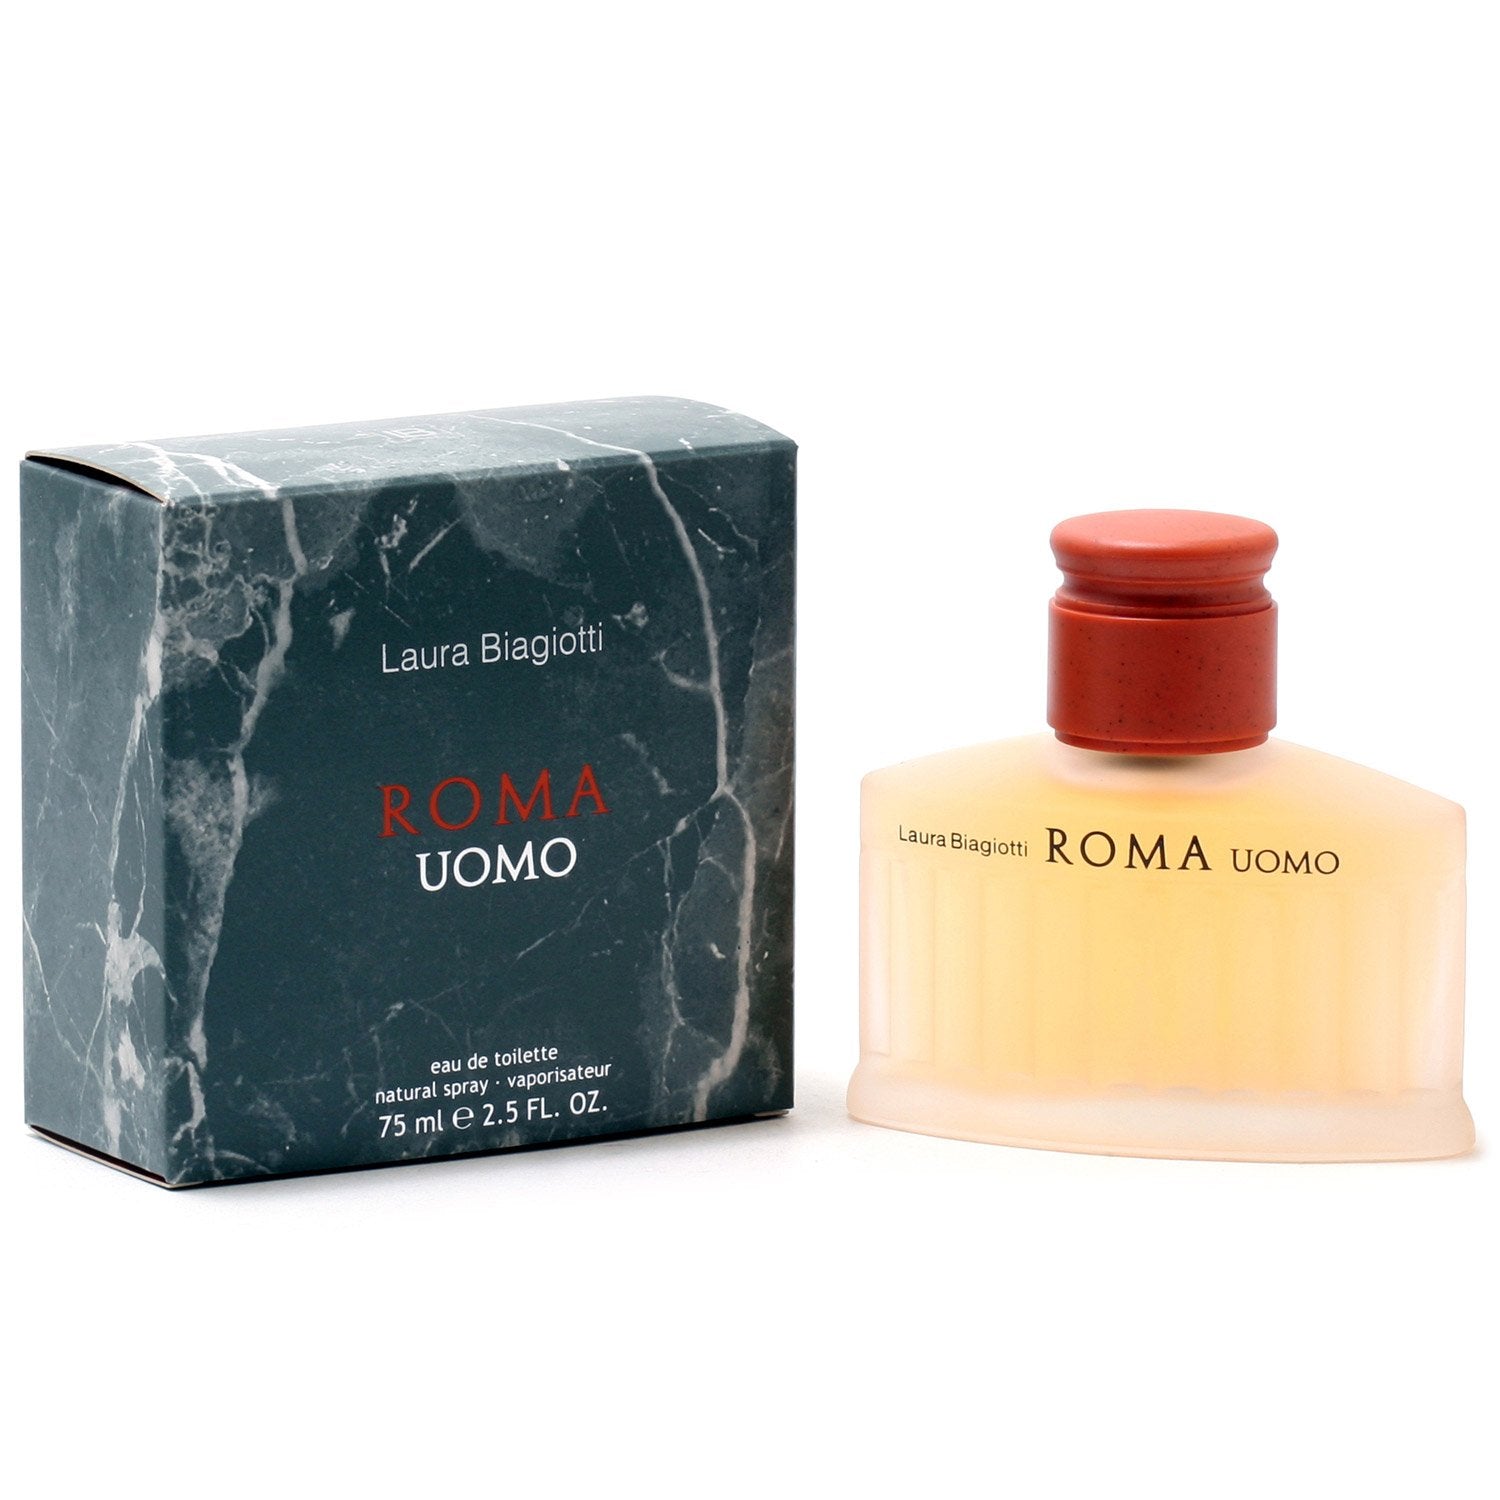 ROMA UOMO FOR 2.5 – Room EAU SPRAY, OZ BIAGIOTTI - LAURA Fragrance BY DE MEN TOILETTE